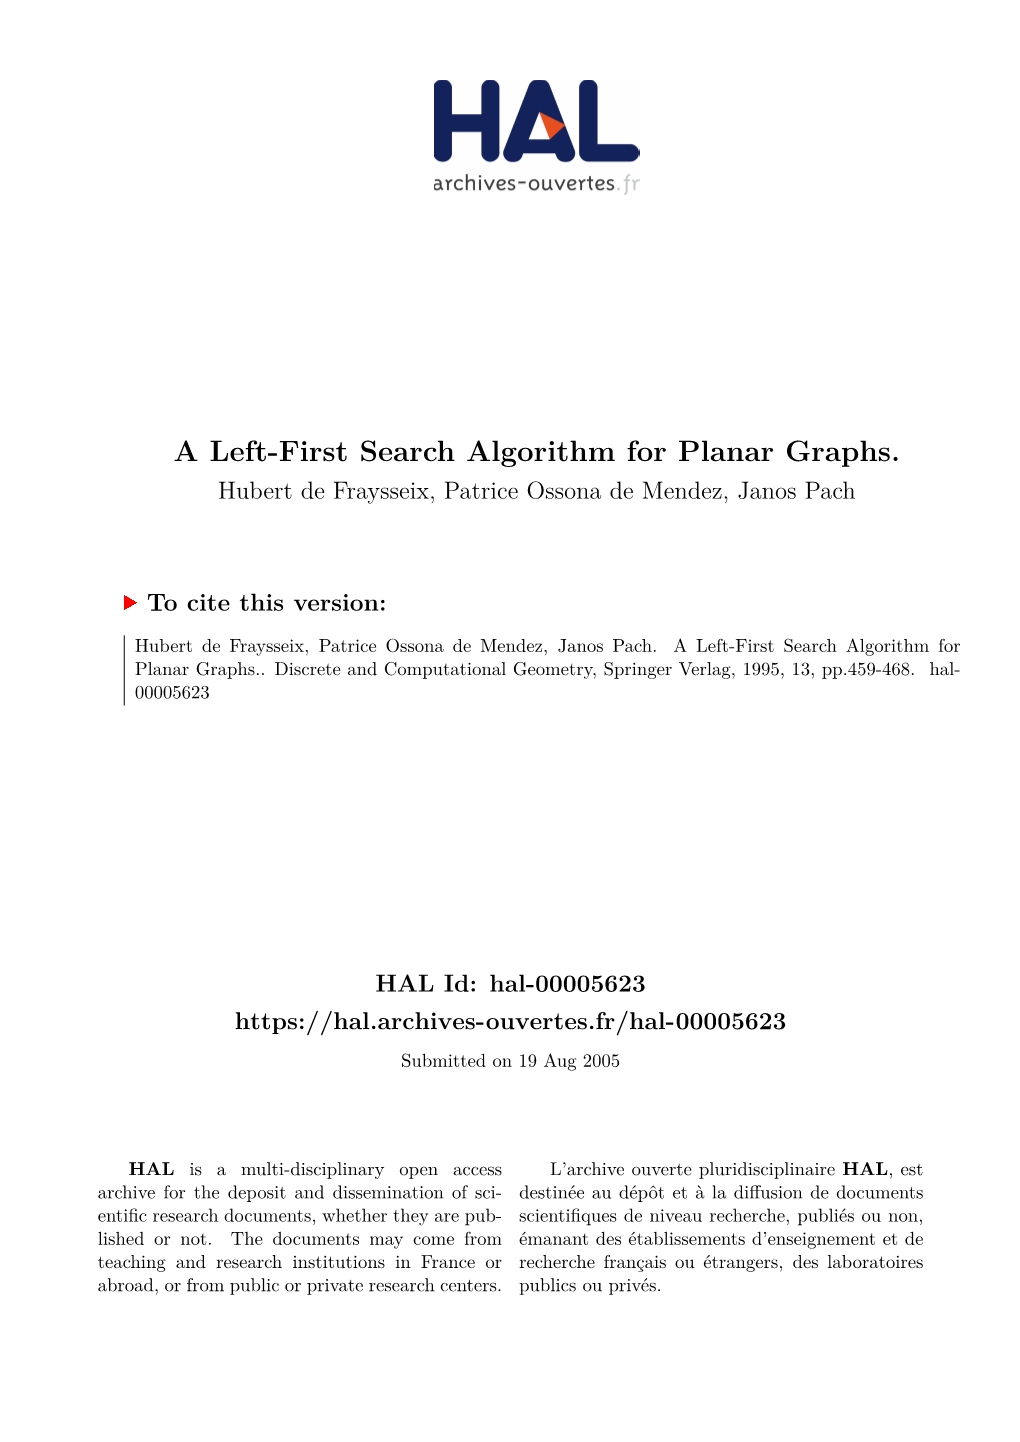 A Left-First Search Algorithm for Planar Graphs. Hubert De Fraysseix, Patrice Ossona De Mendez, Janos Pach